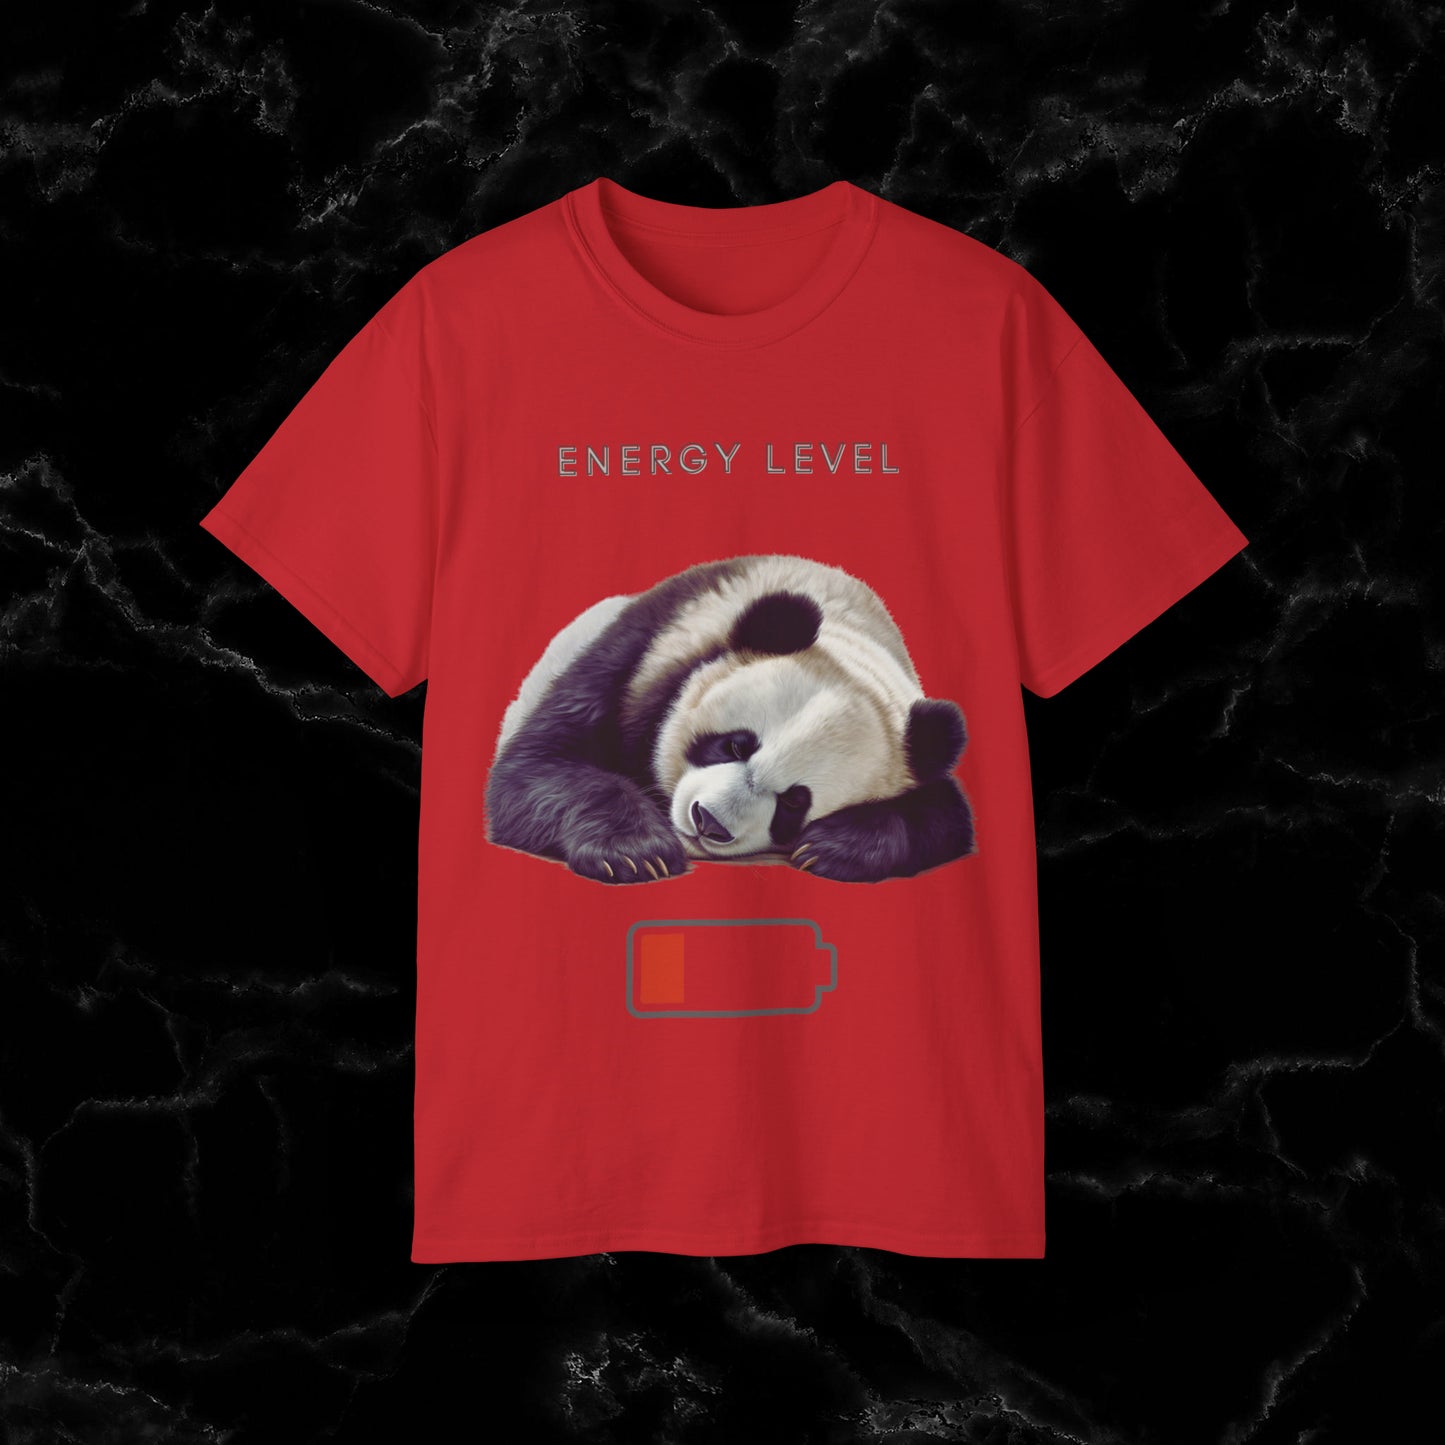 Nap Time Panda Unisex Funny Tee - Hilarious Panda Nap Design - Energy Level T-Shirt Red L 